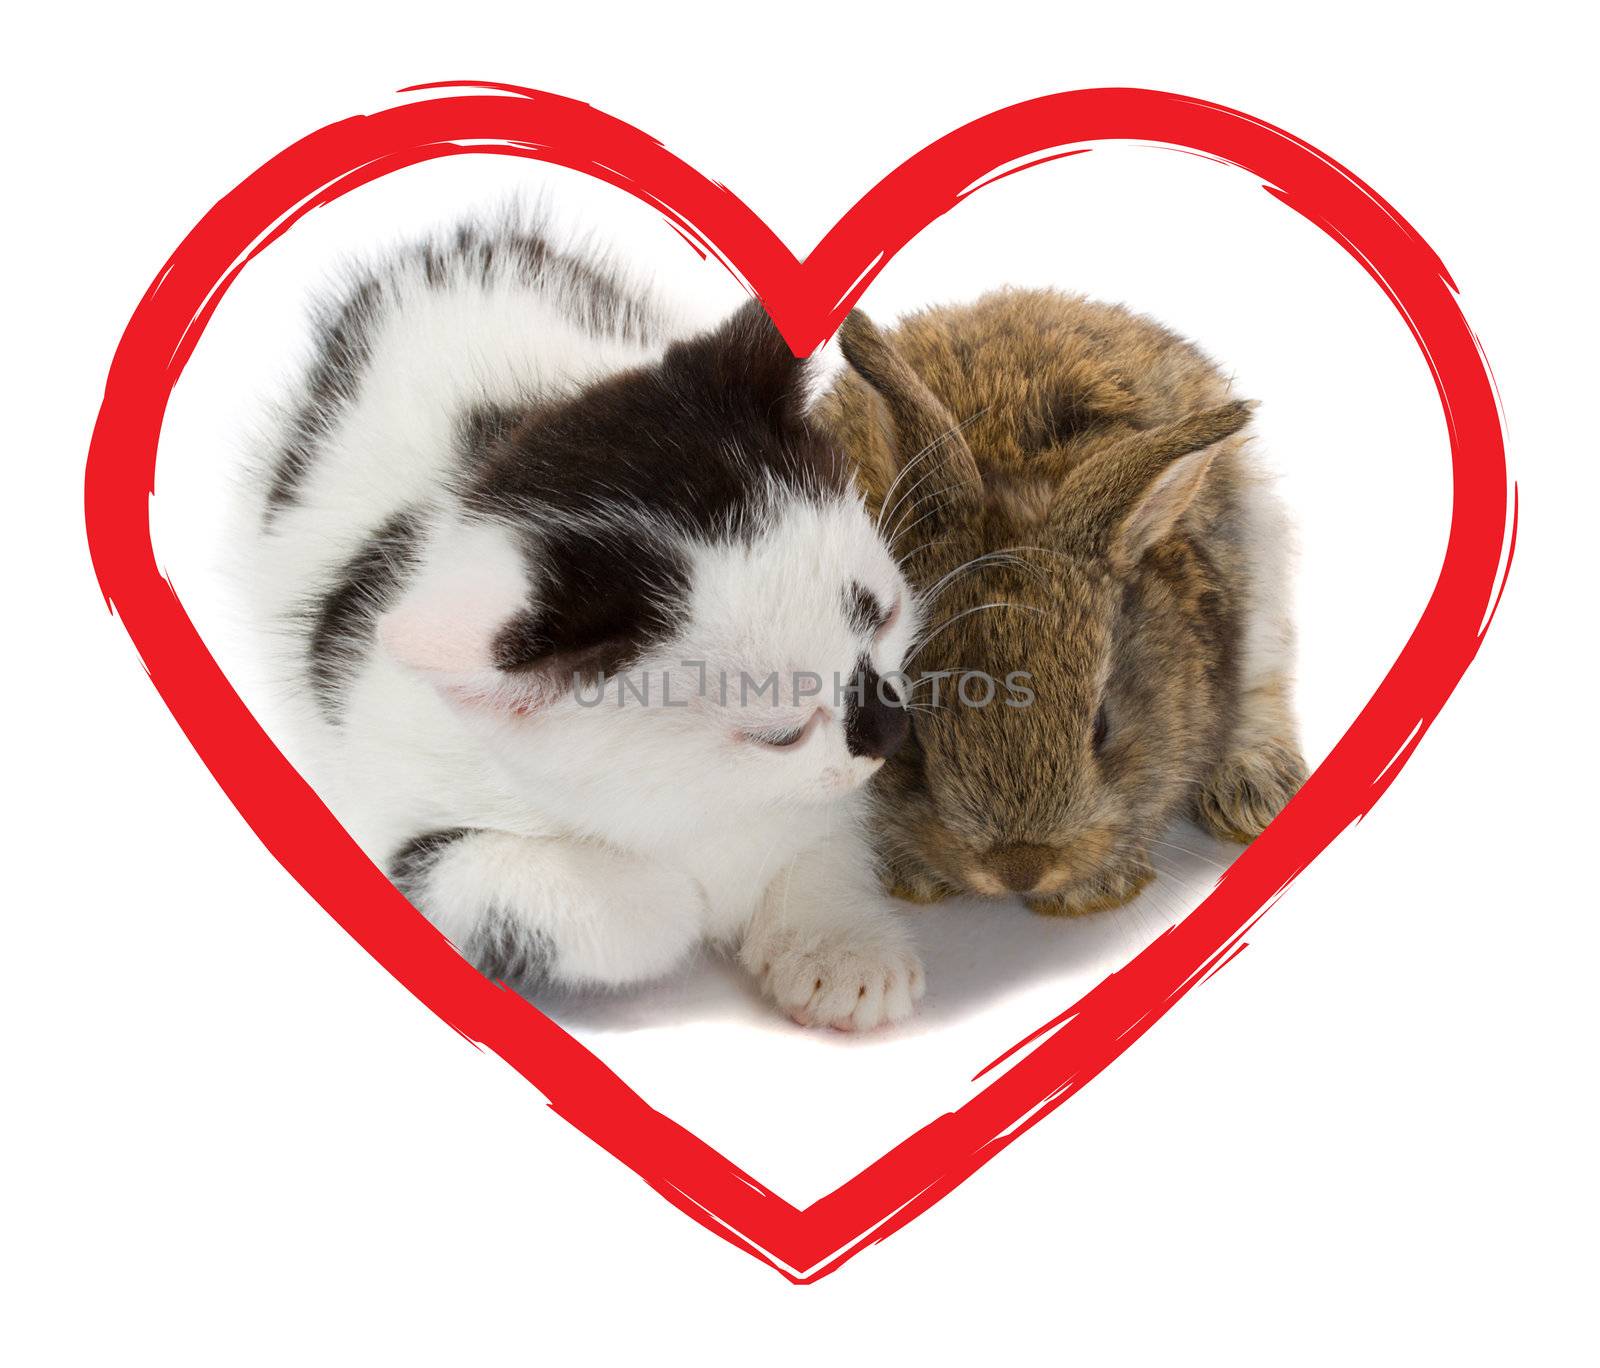 kitten and bunny in heart by Alekcey